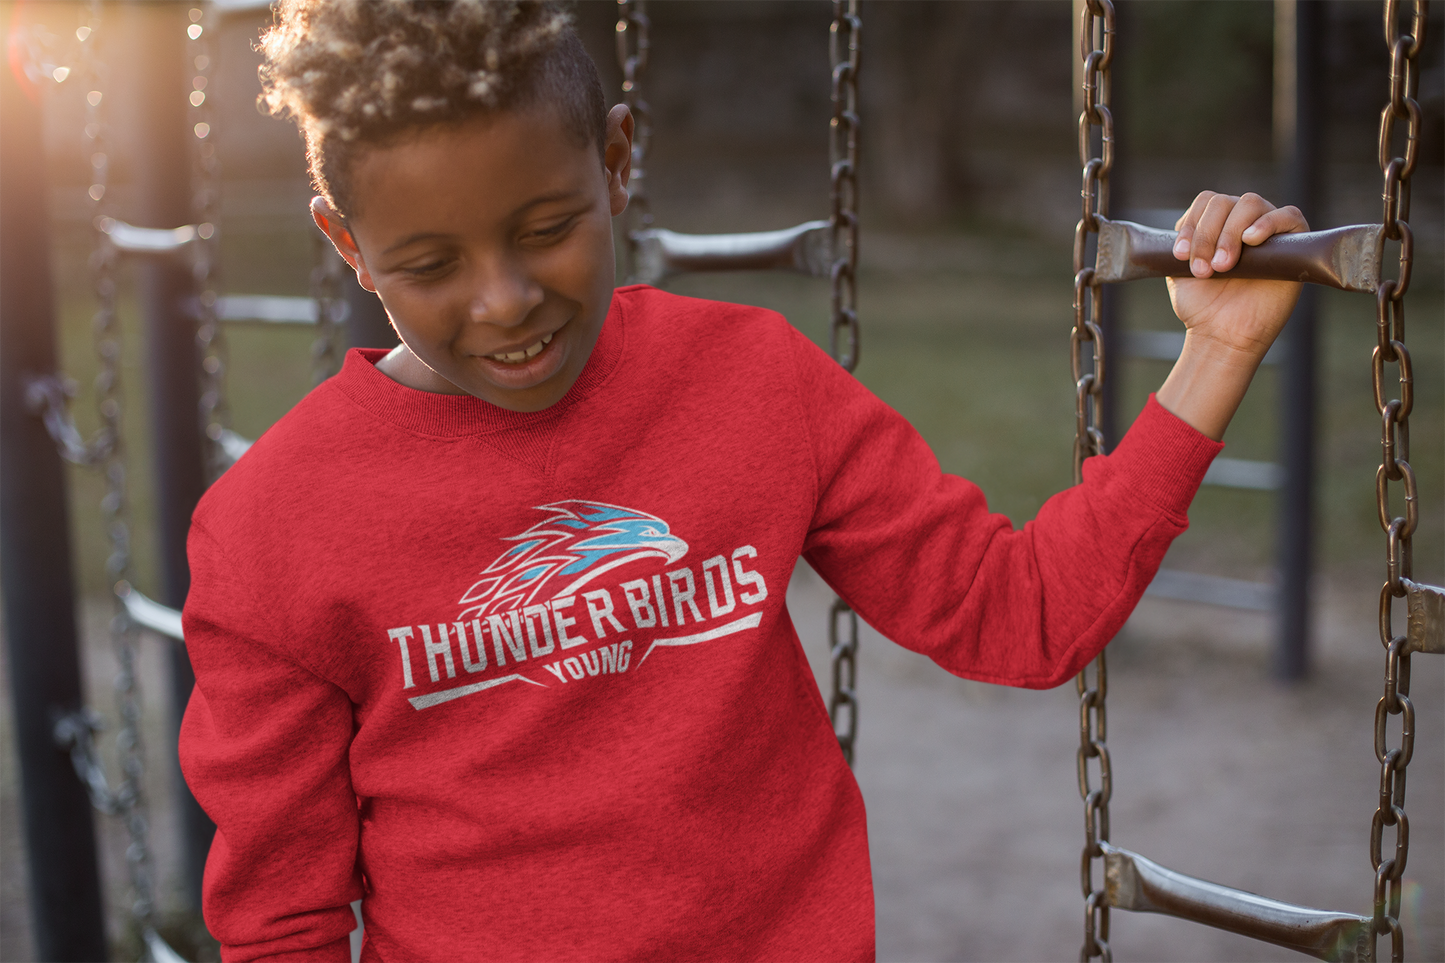 Youth Young Thunderbird Logo Sweatshirt